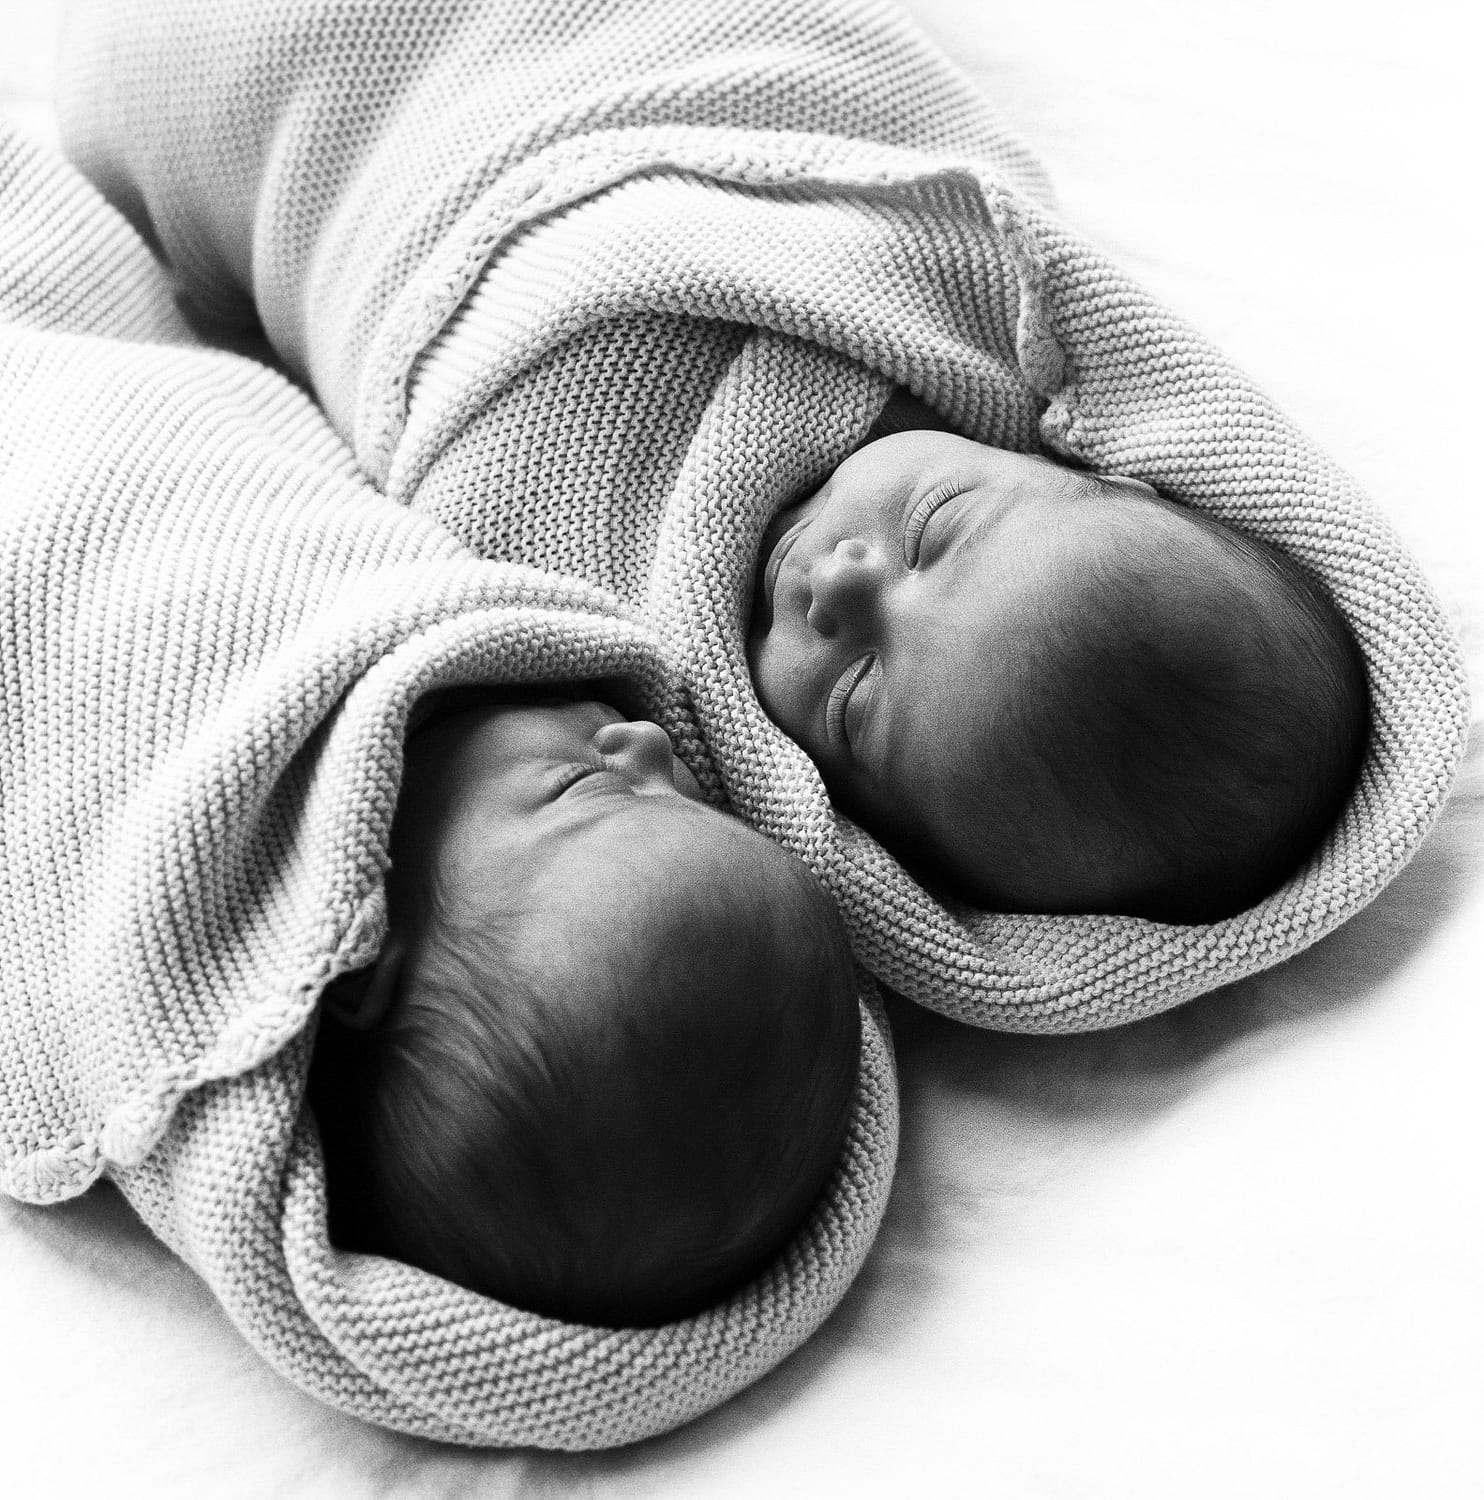 Zwillingsbabys nebeneinander in Babydecken gepuckt beim Baby Fotoshooting in Hamburg Neustadt